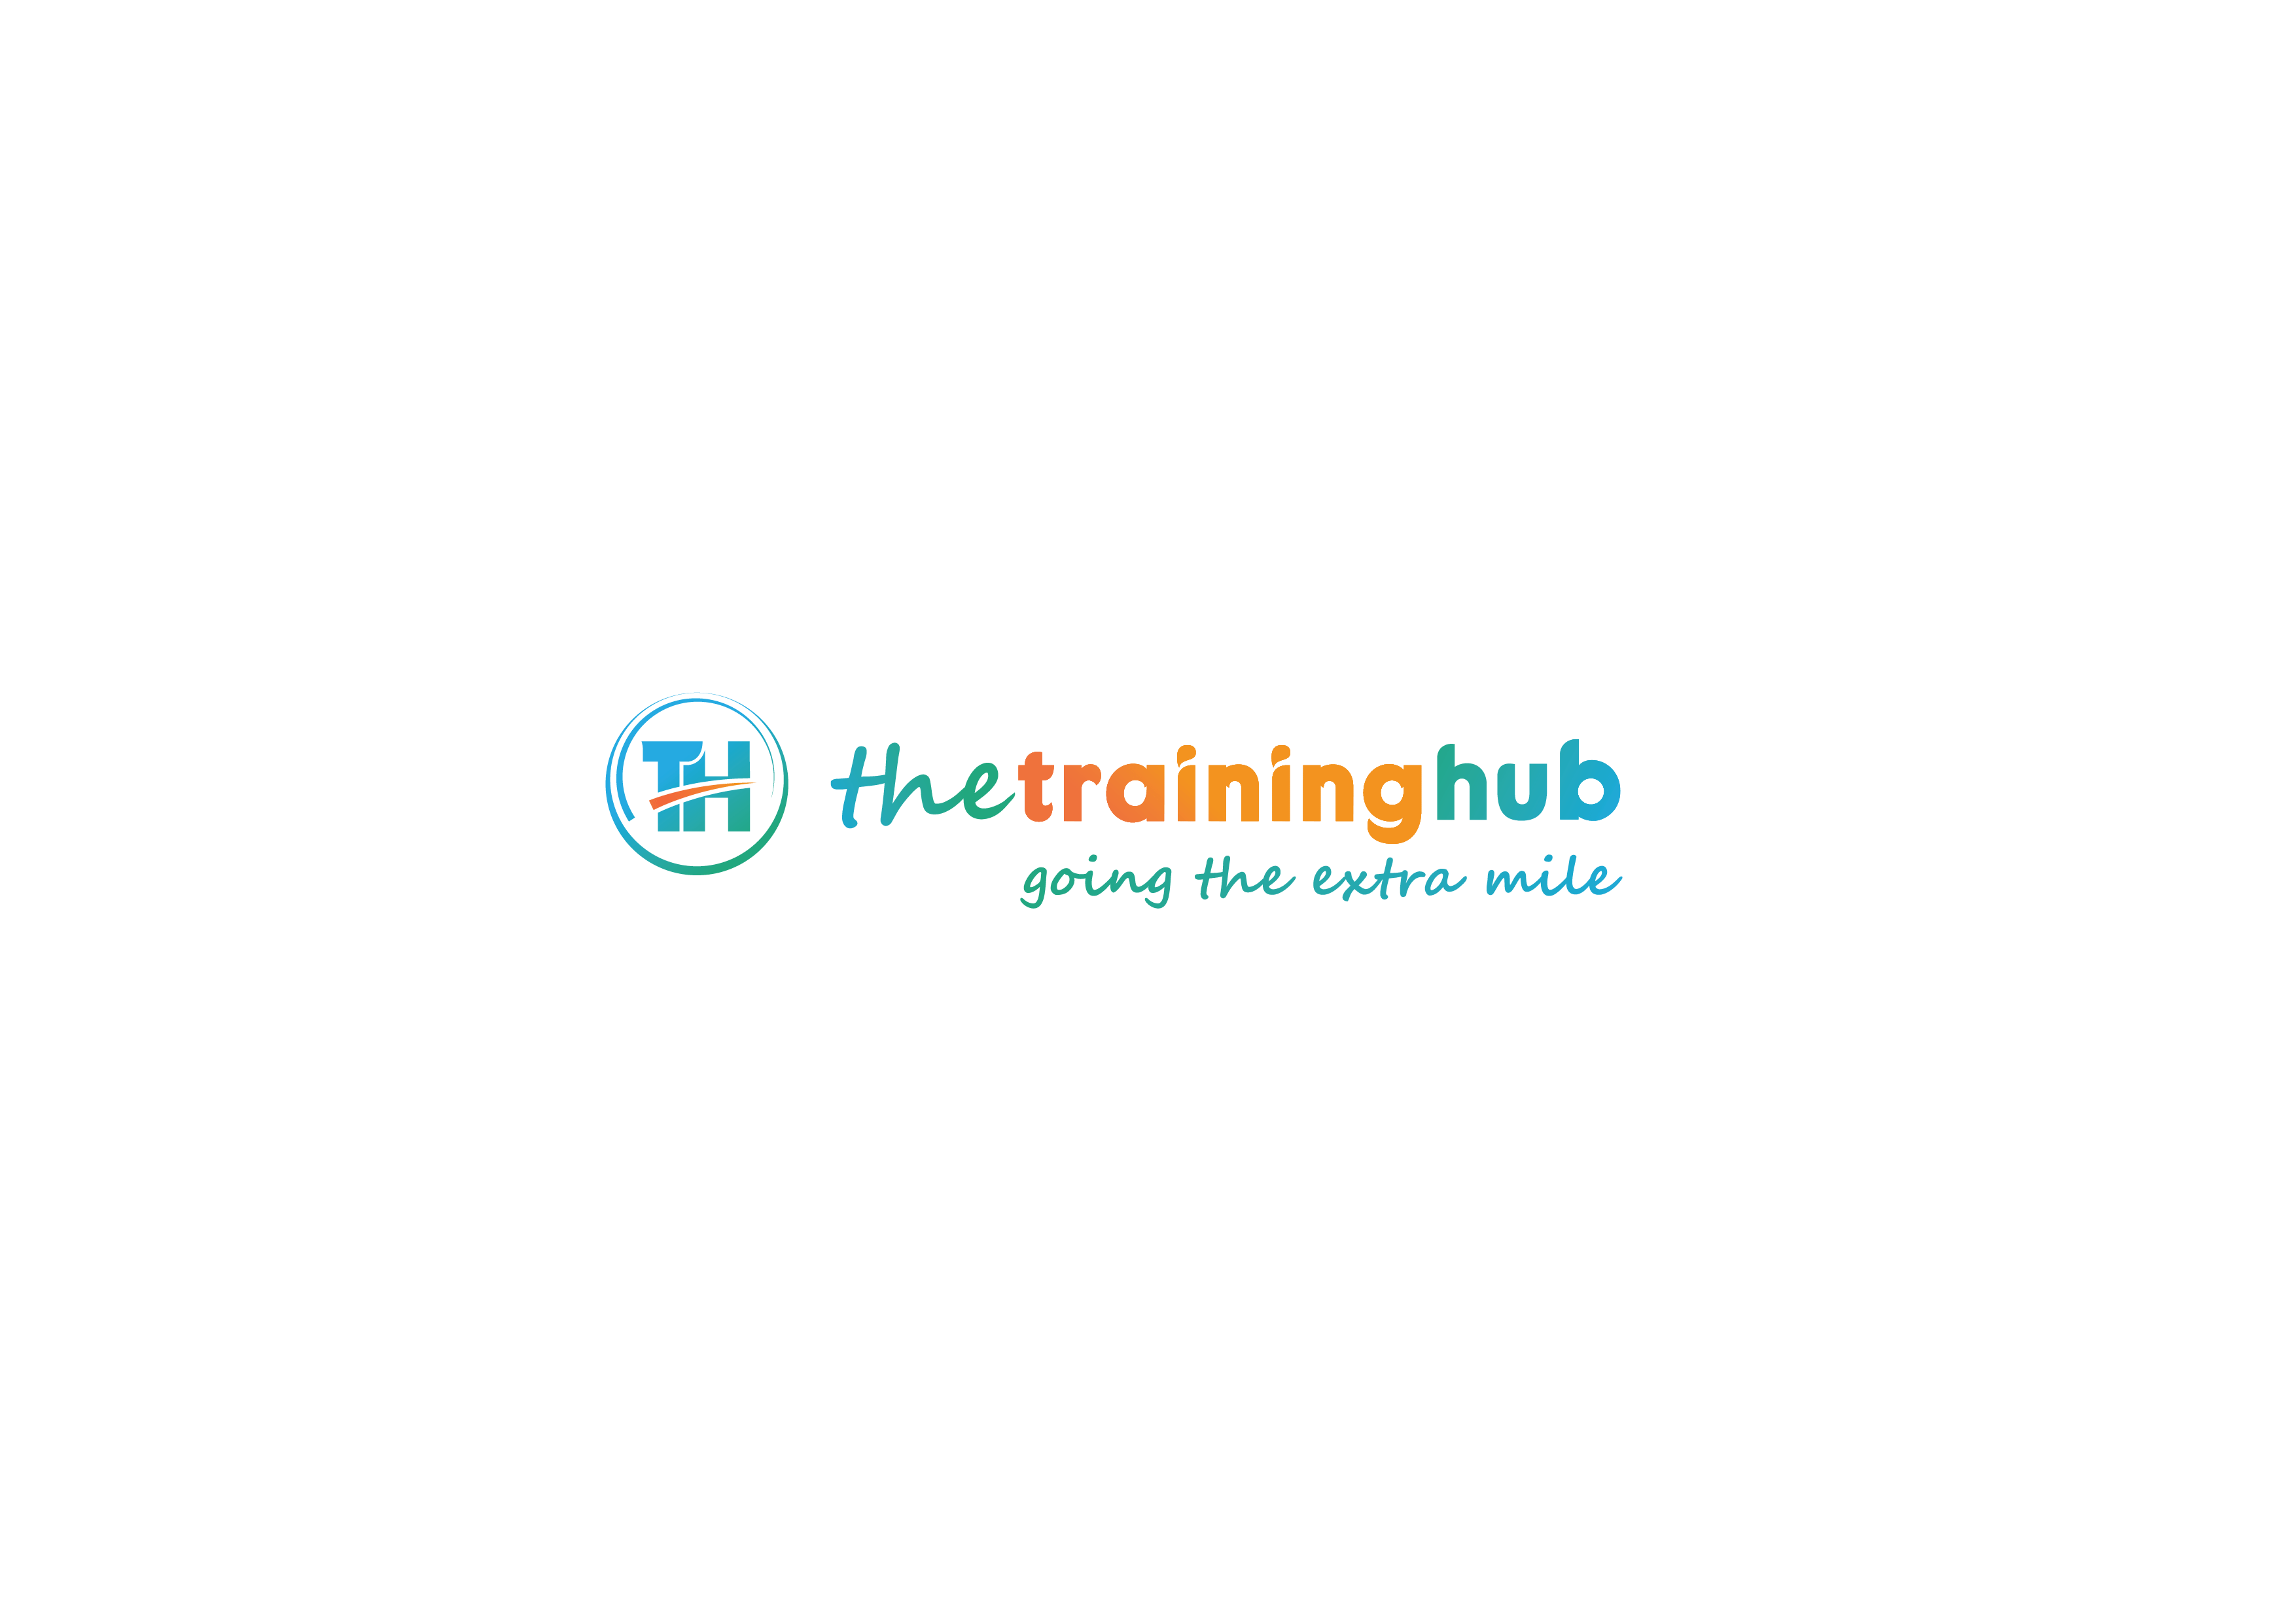 thetraininghub.ro, cursuri, cursuri calificare, cursuri specializare, traininguri, coaching, espresso training, recrutare, 